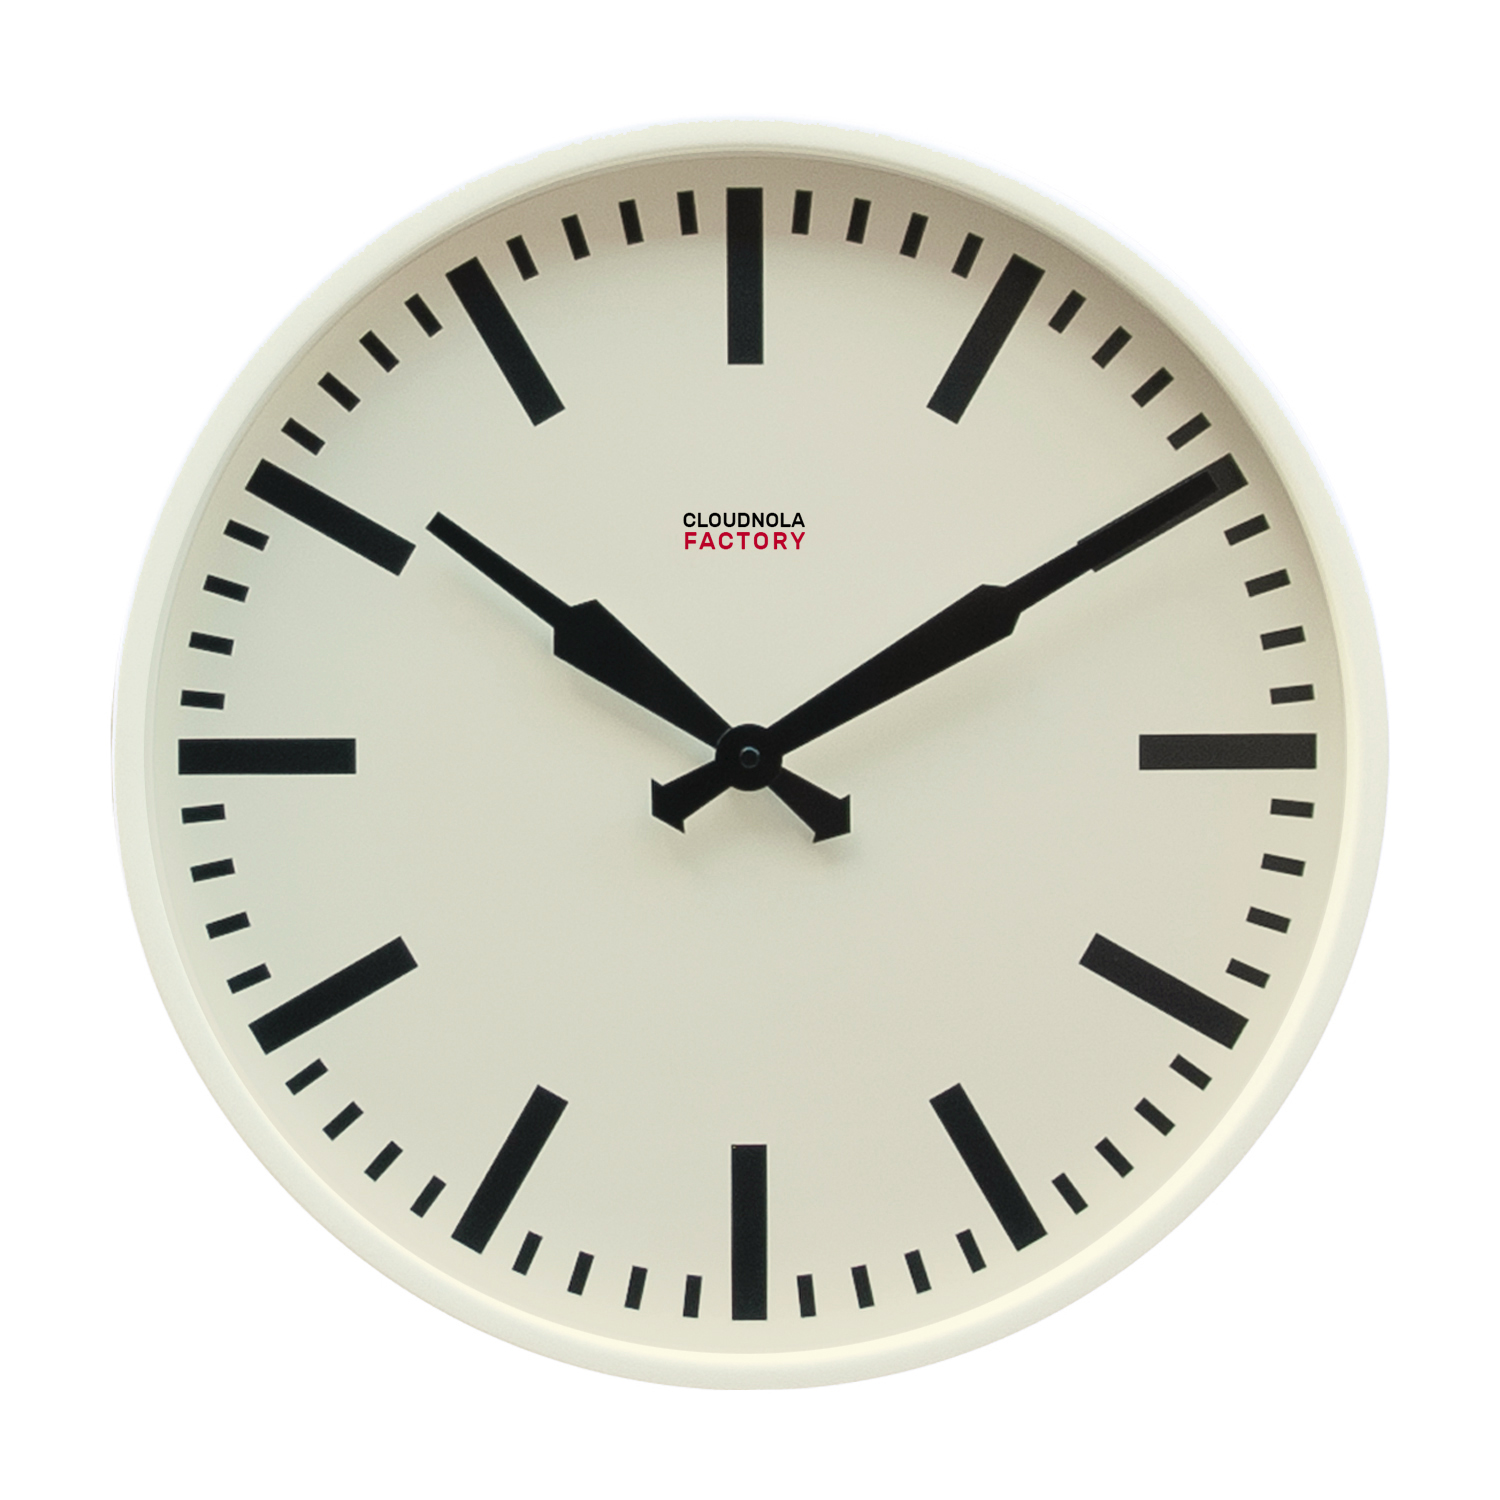 Cloudnola Factory Railway clock 45 cm White Stripe